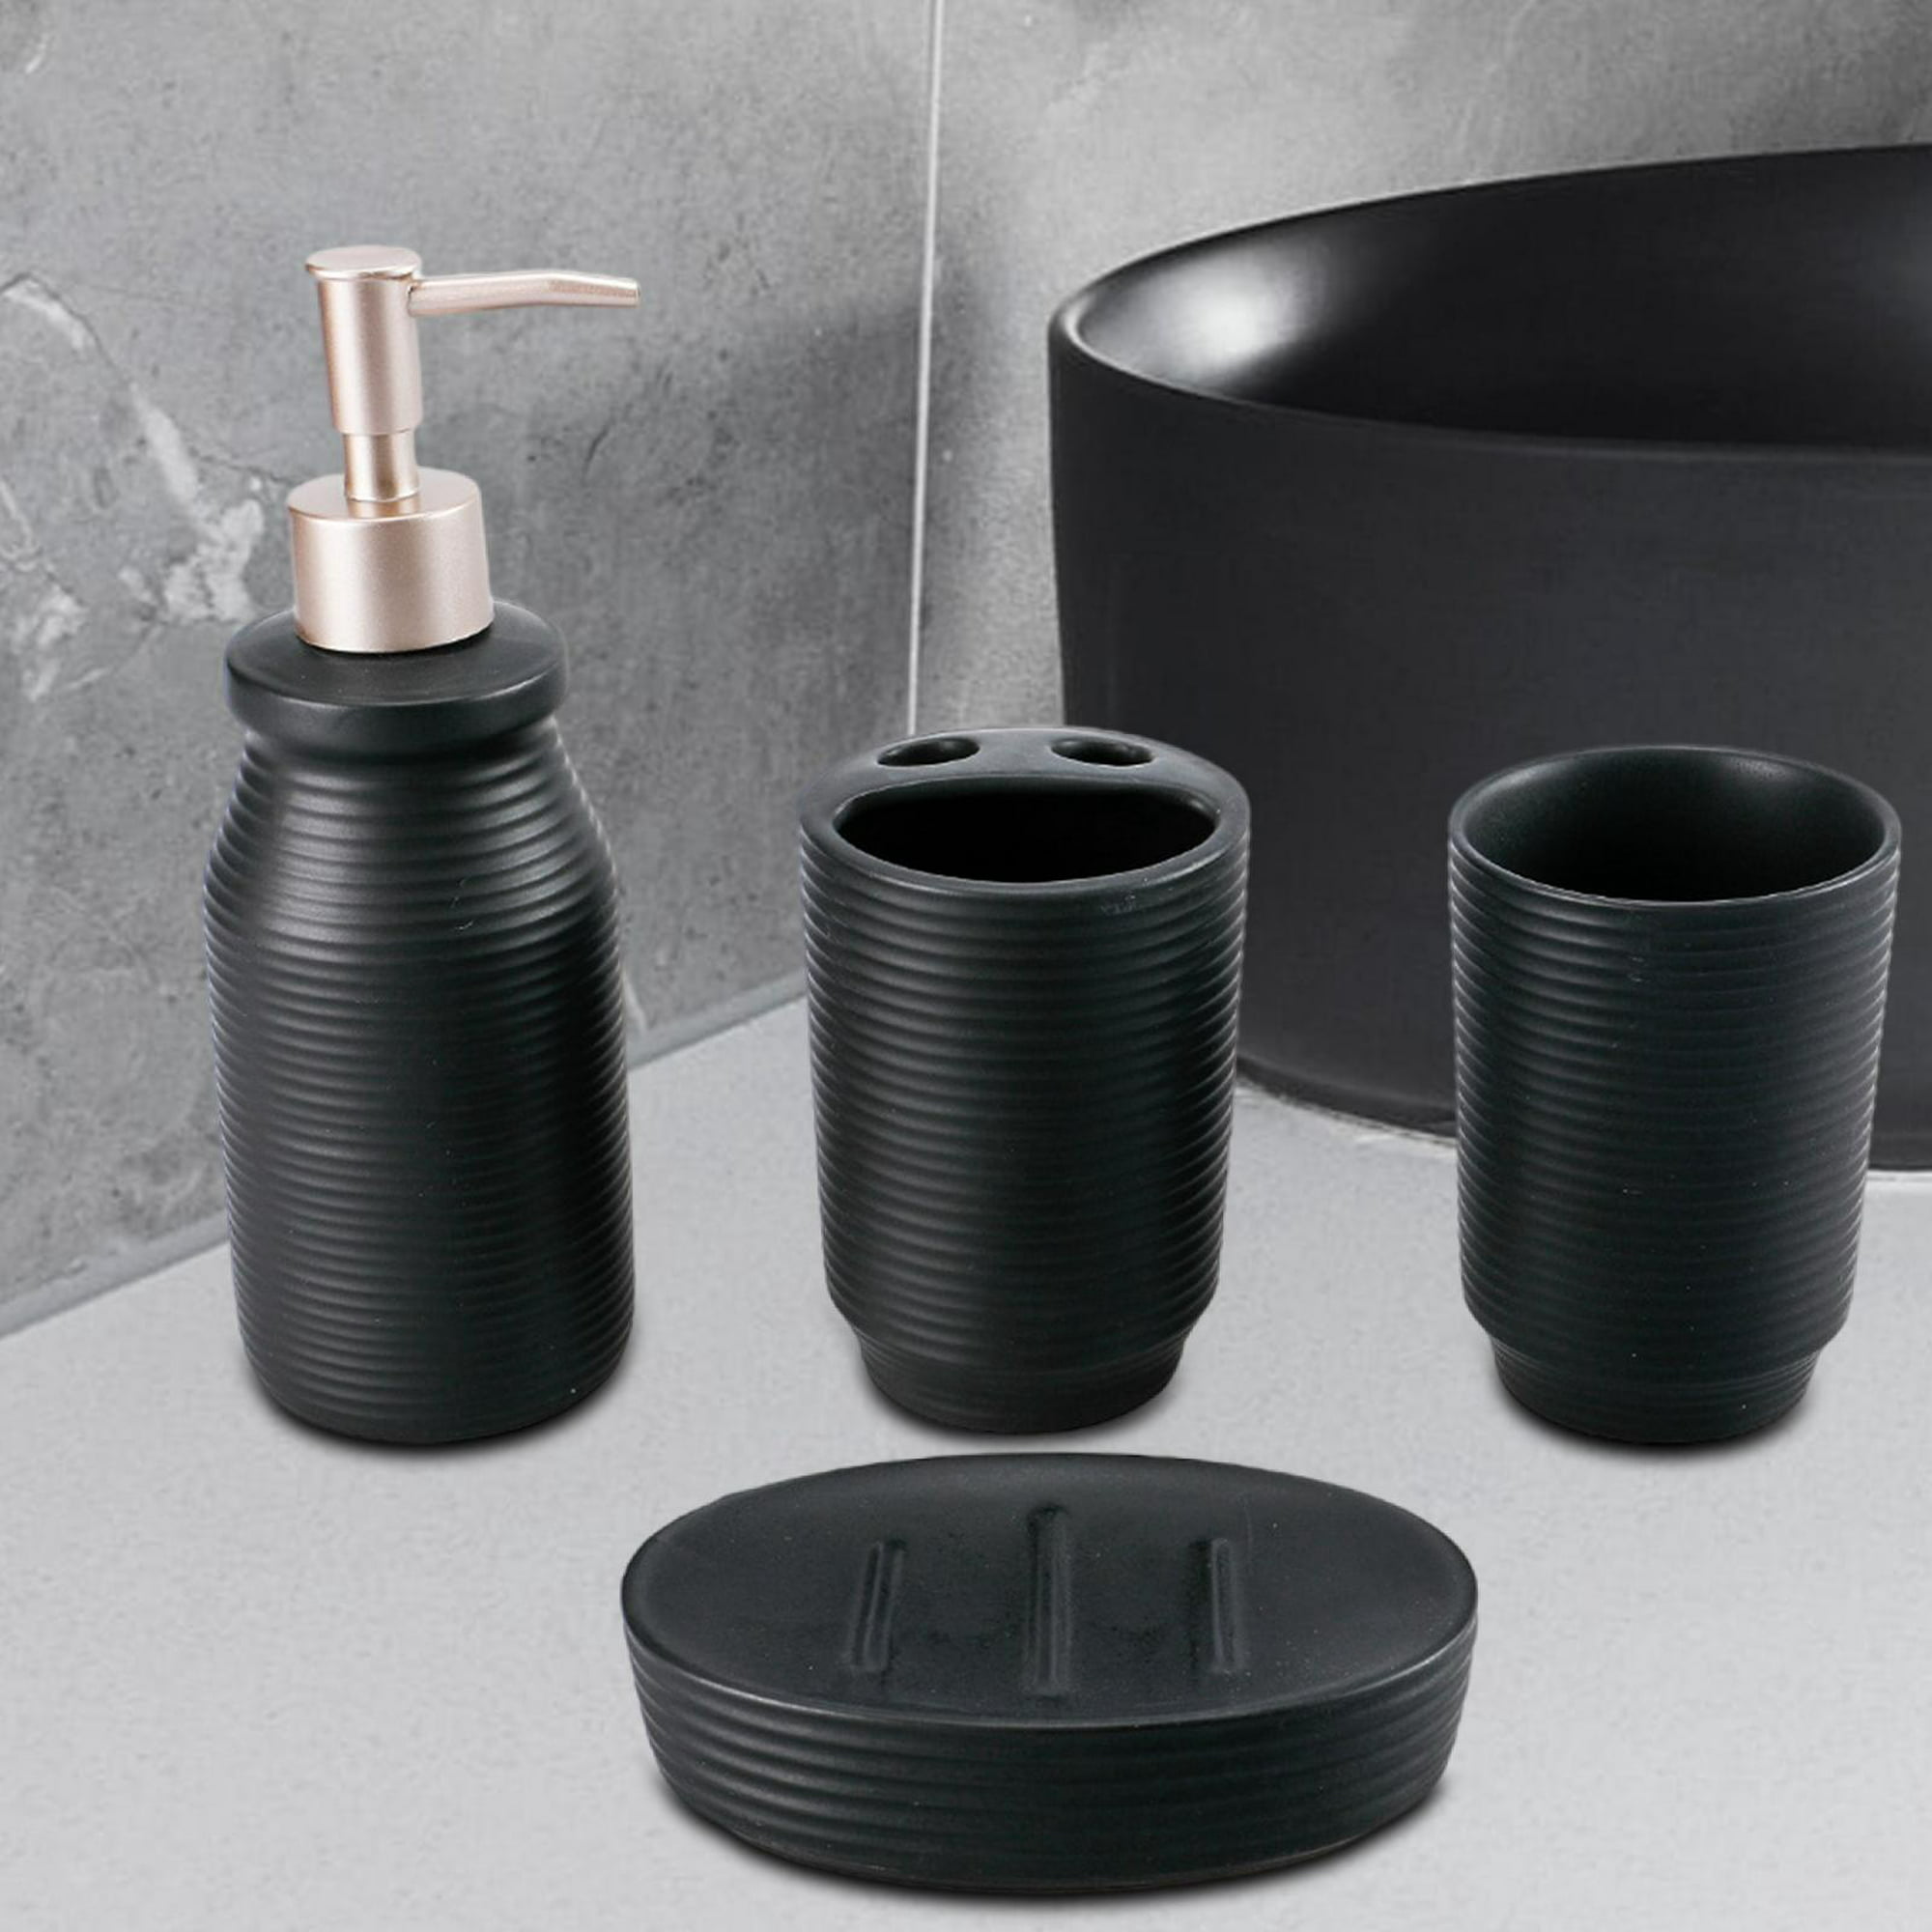  Elegante juego de accesorios de baño negro mate, juego completo  de 4 piezas, decoración de baño moderna, organizador de baño, accesorios  para baño, soporte para cepillos de dientes, dispensador de jabón